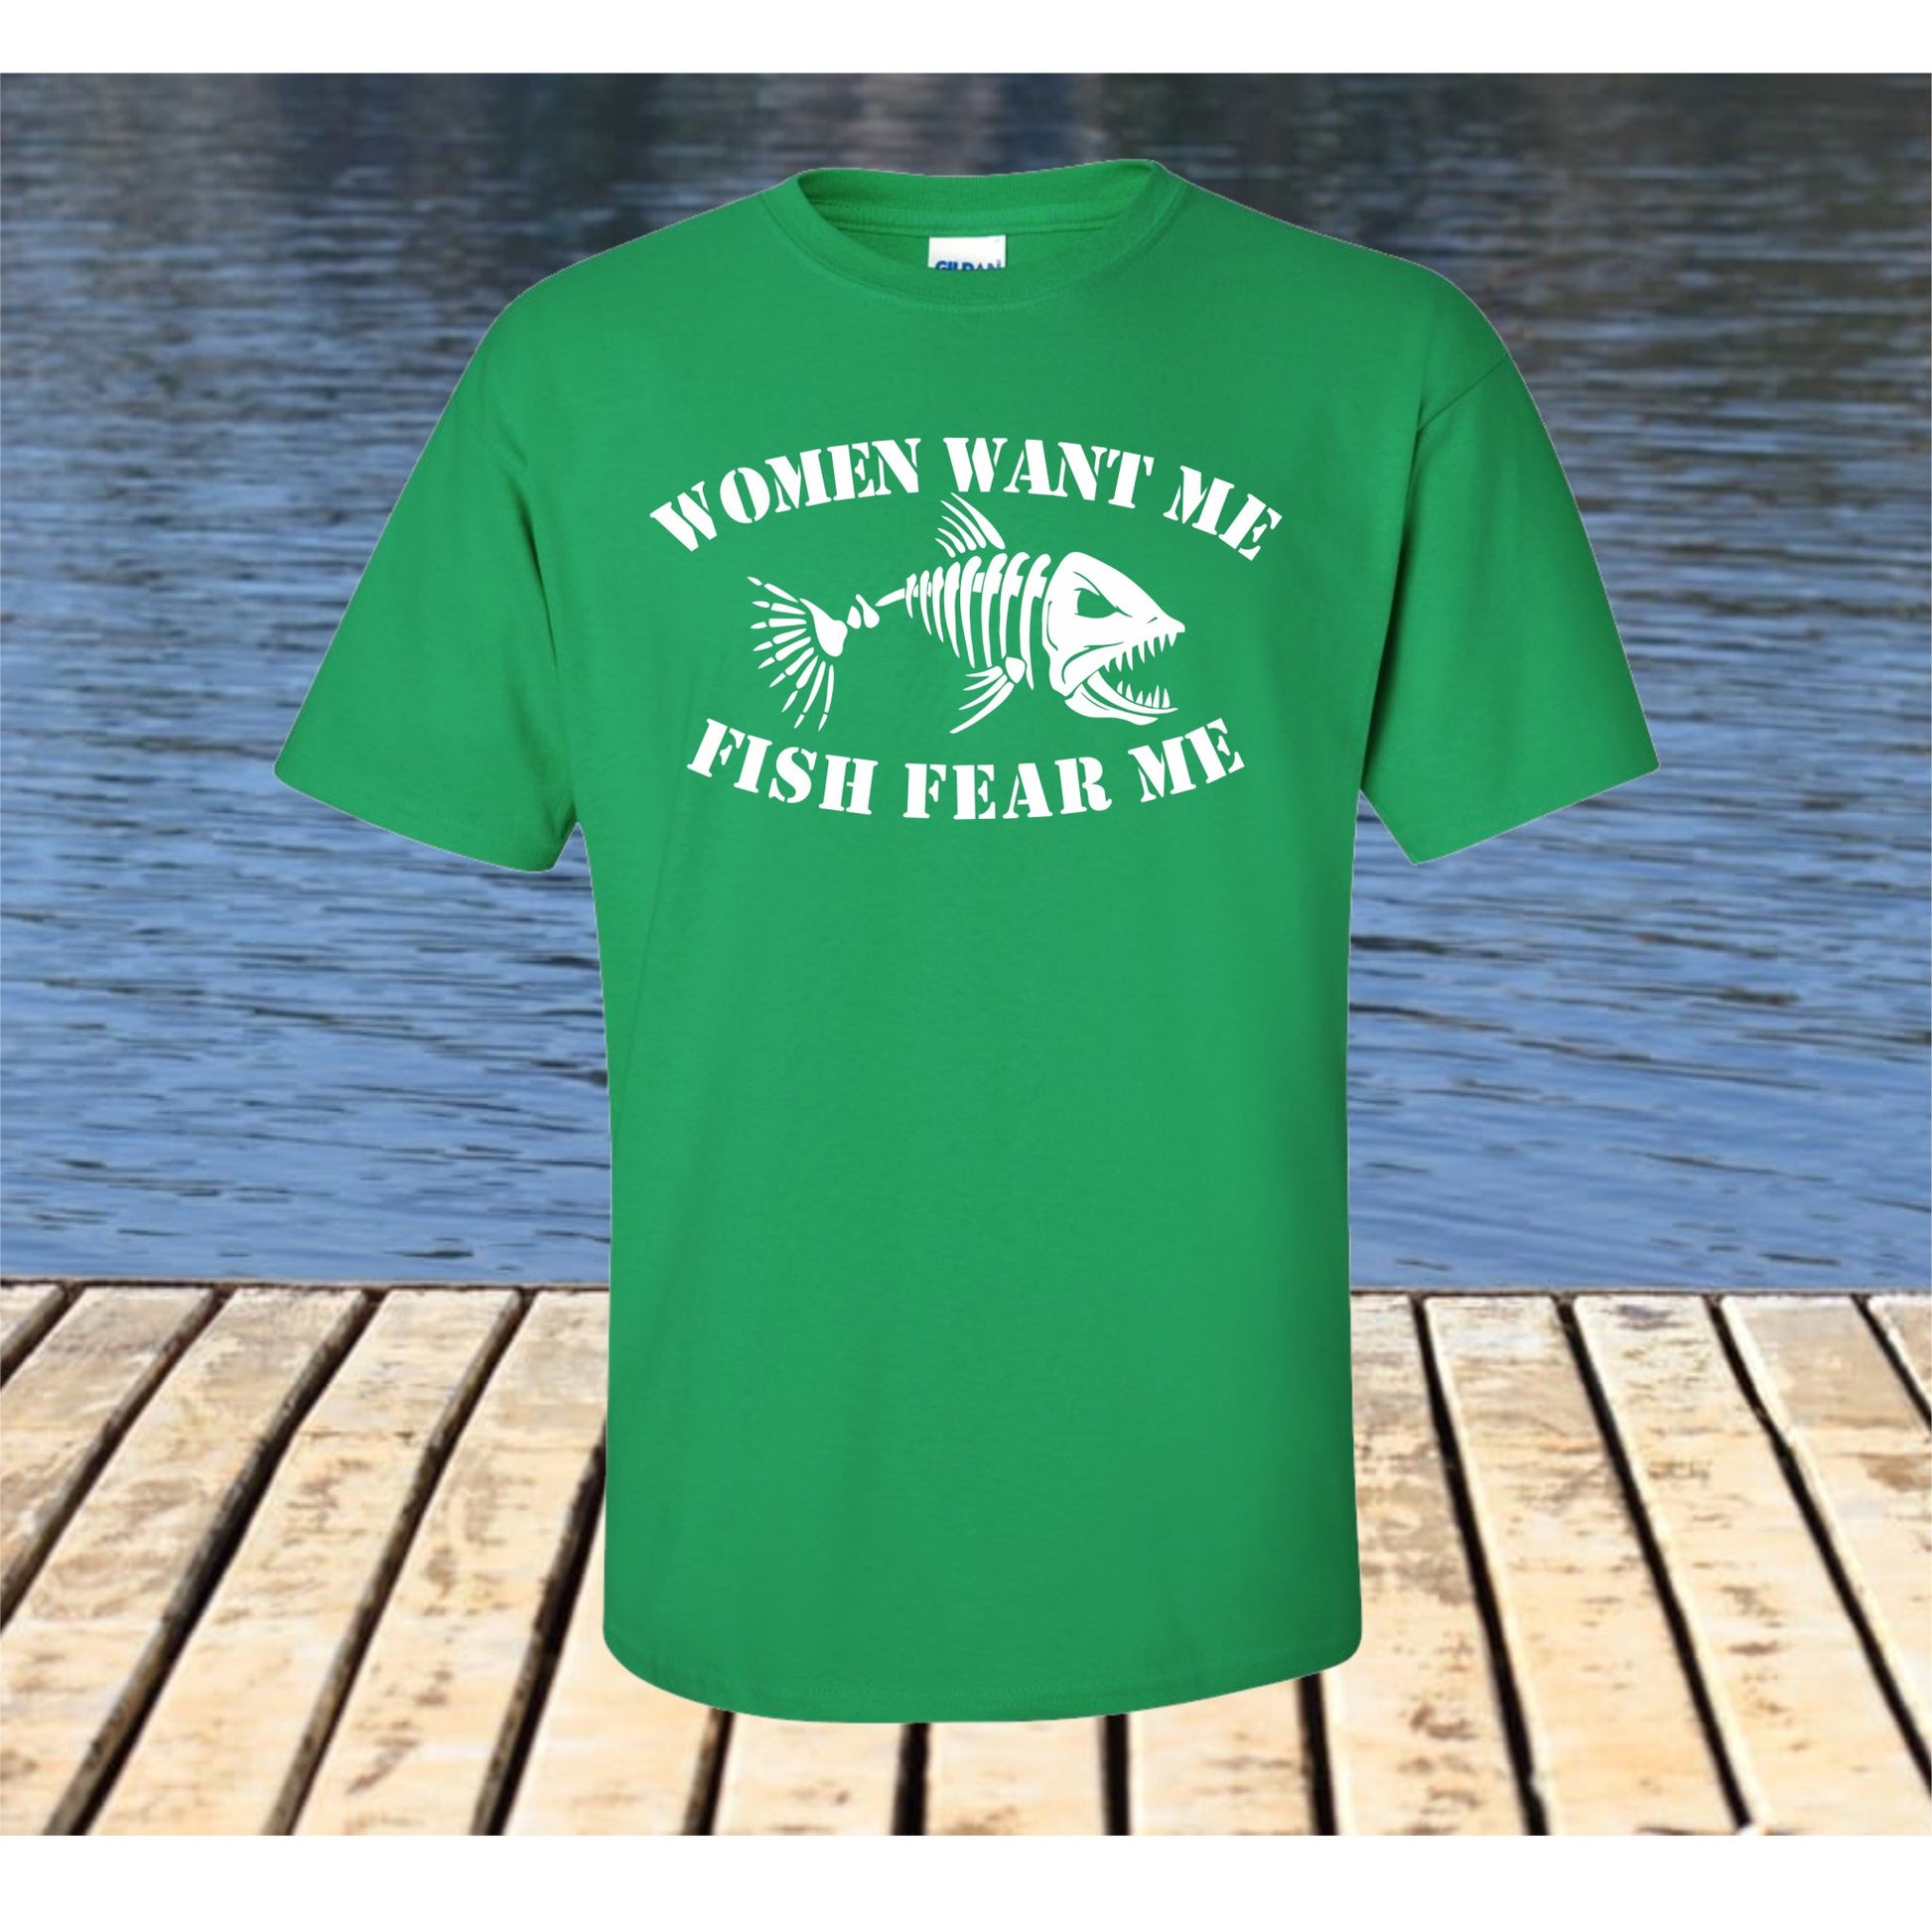 I Like Fishing And Maybe 3 People Fisherman Gift' Men's T-Shirt